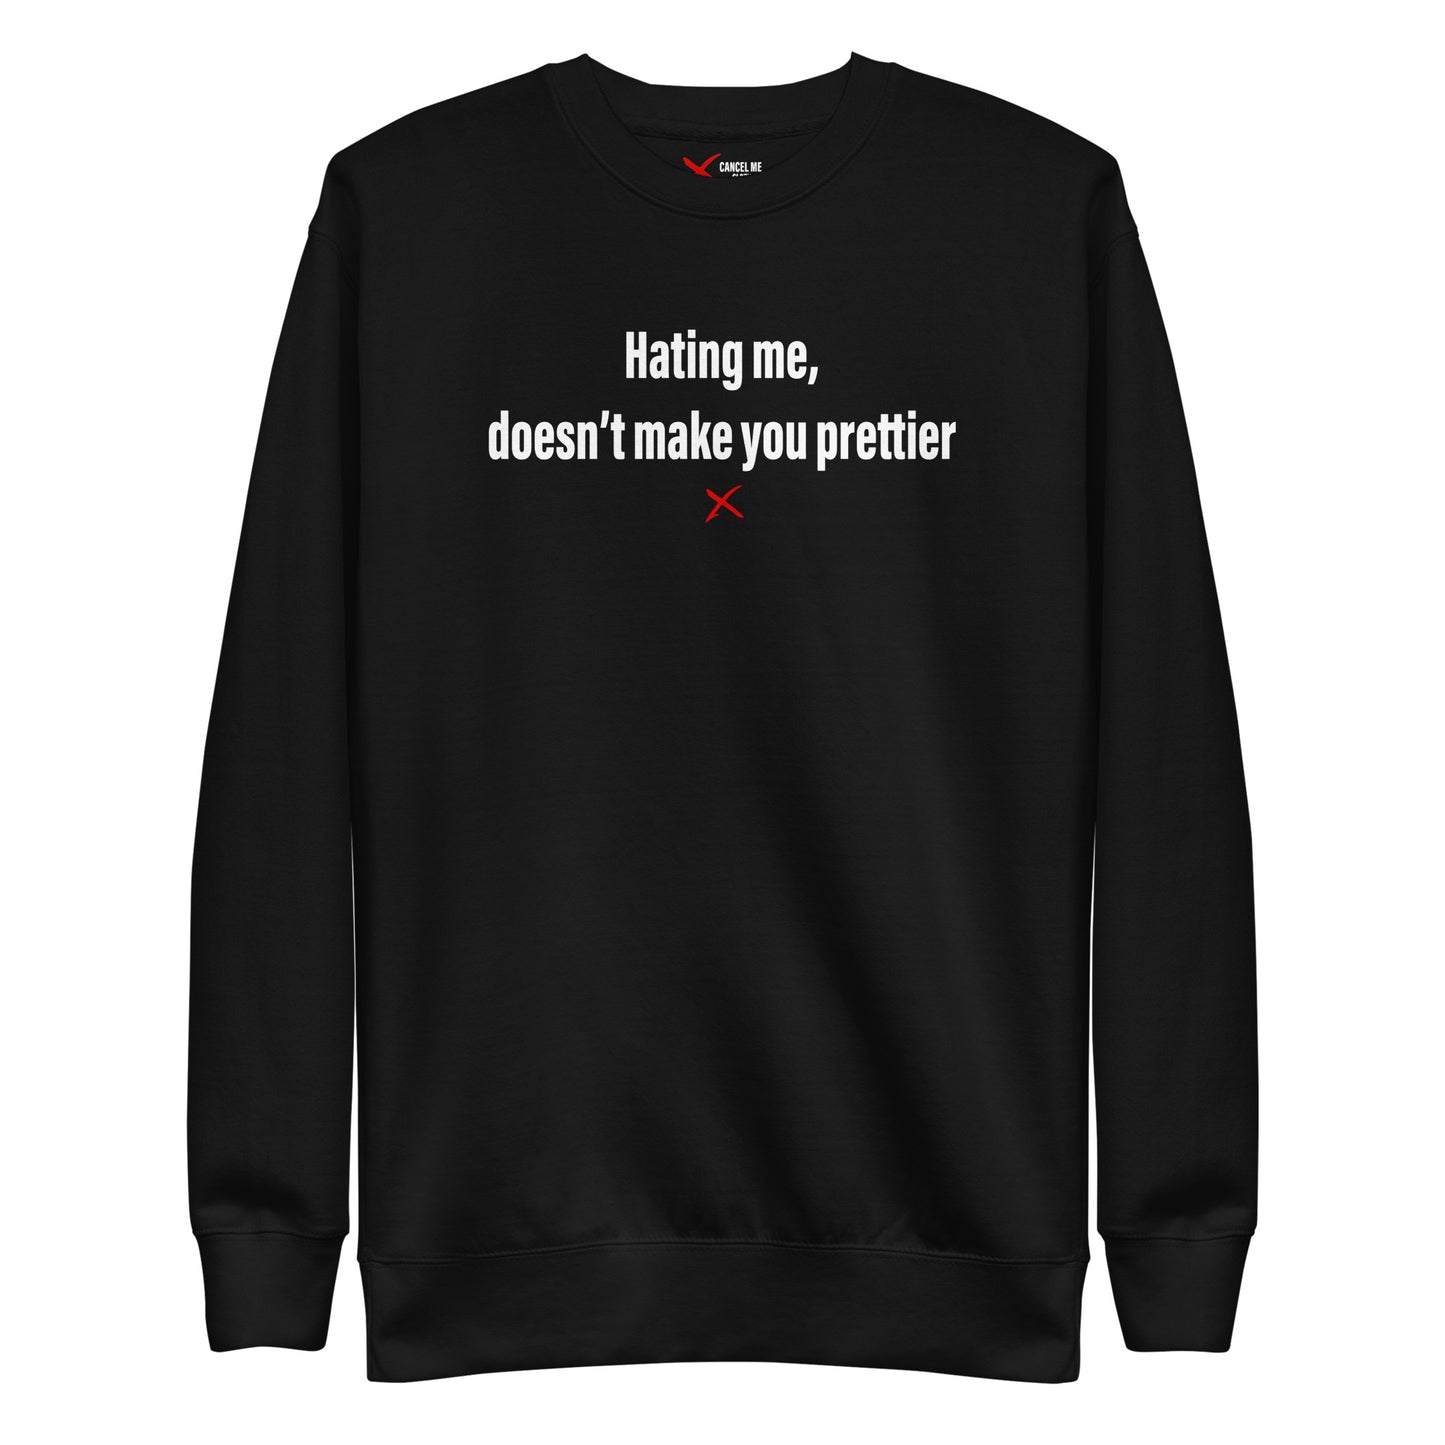 Hating me, doesn't make you prettier - Sweatshirt